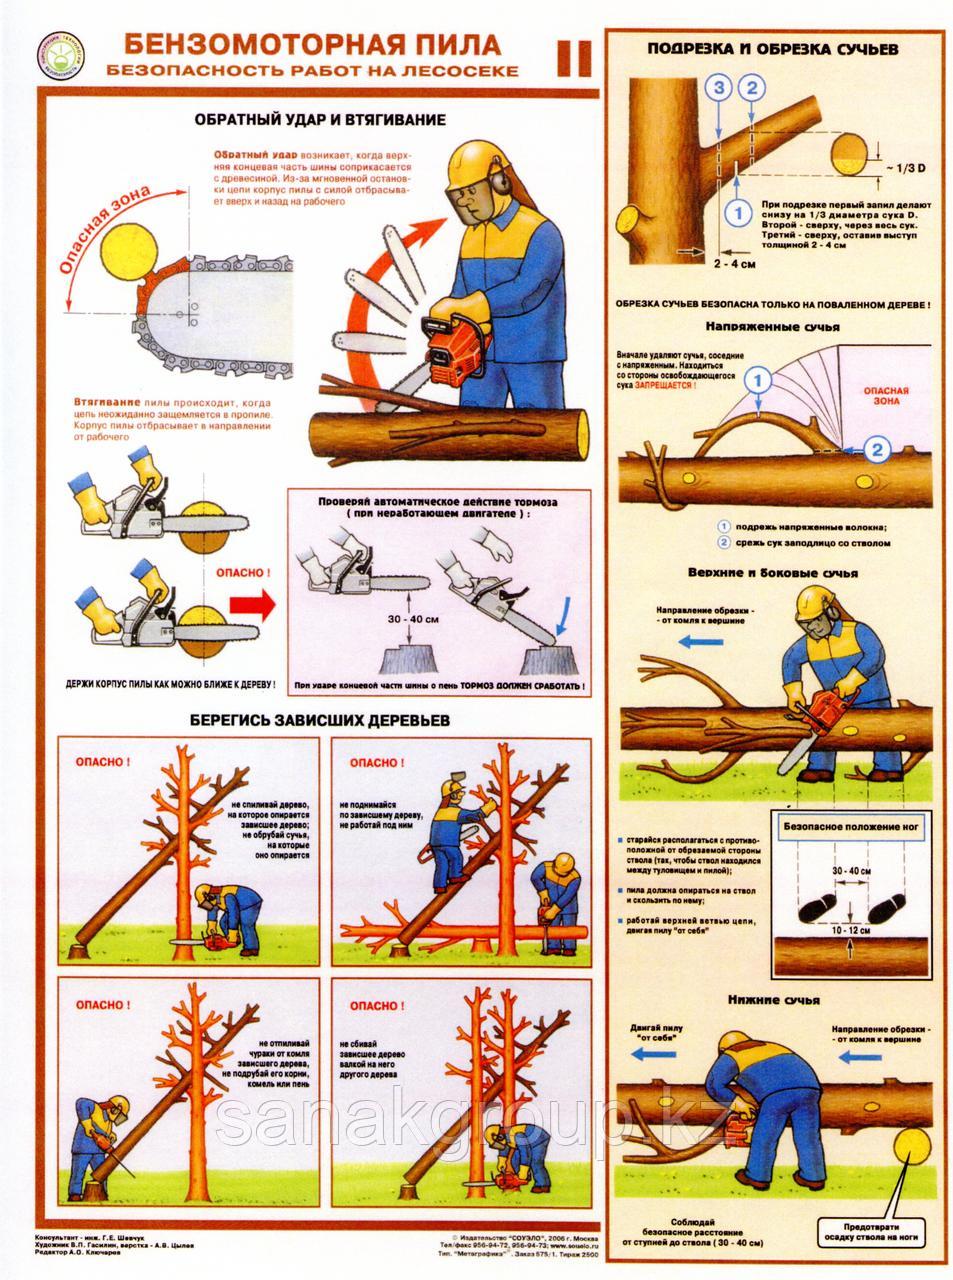 Плакат "Техника безопасности при работе с древесиной"